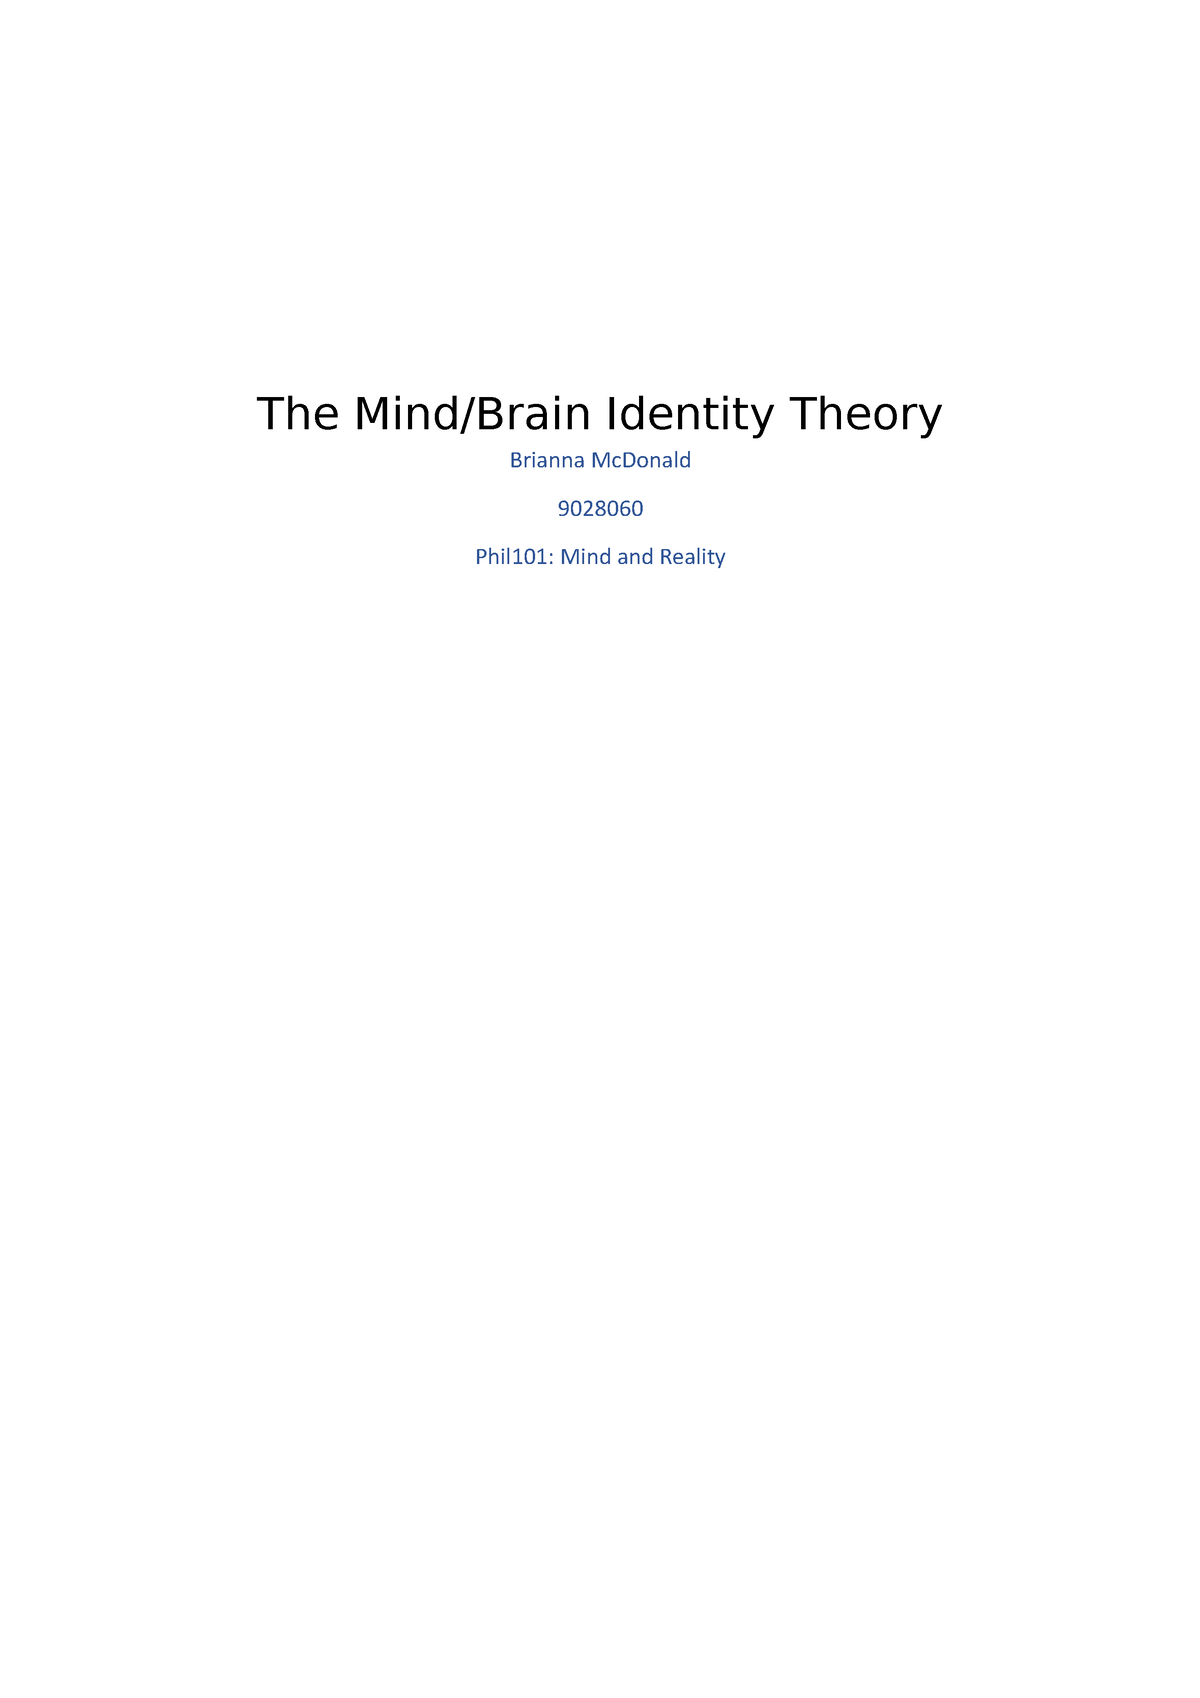 mind brain identity theory essay